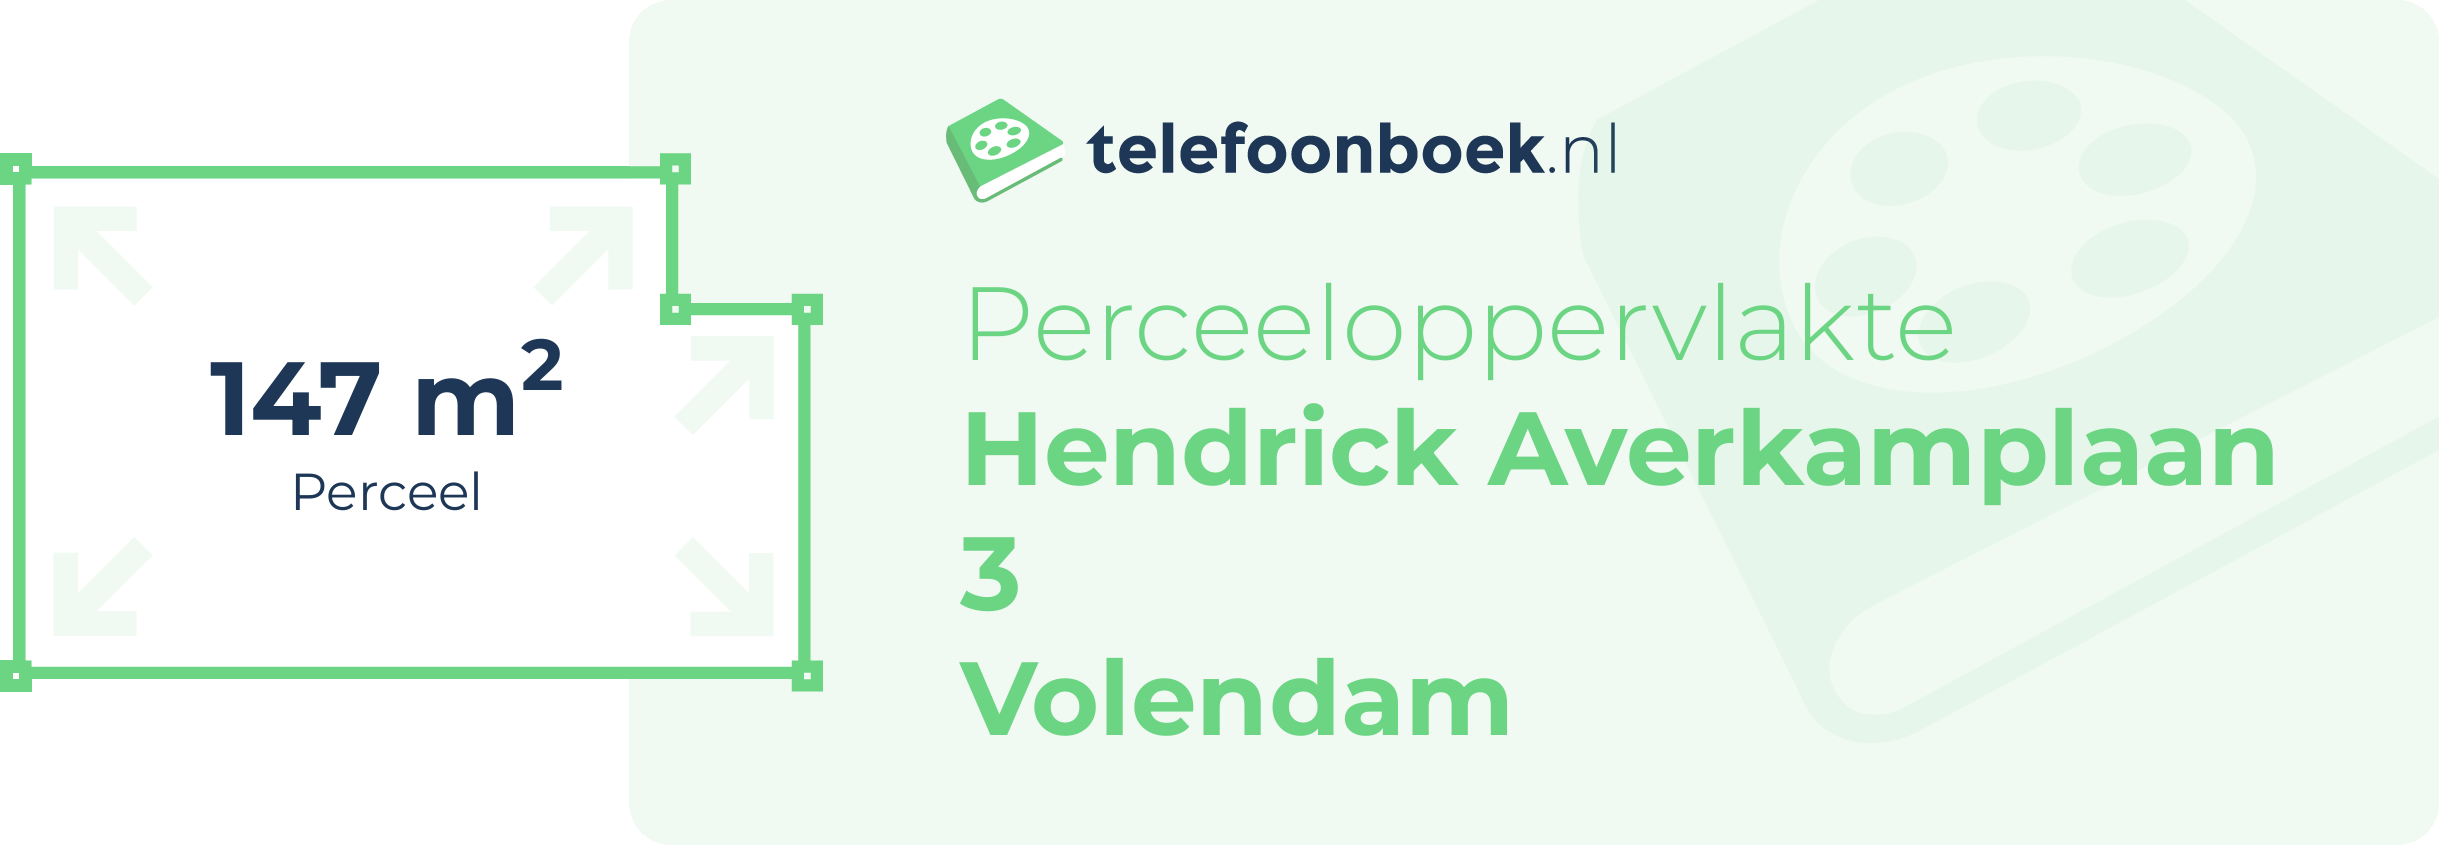 Perceeloppervlakte Hendrick Averkamplaan 3 Volendam